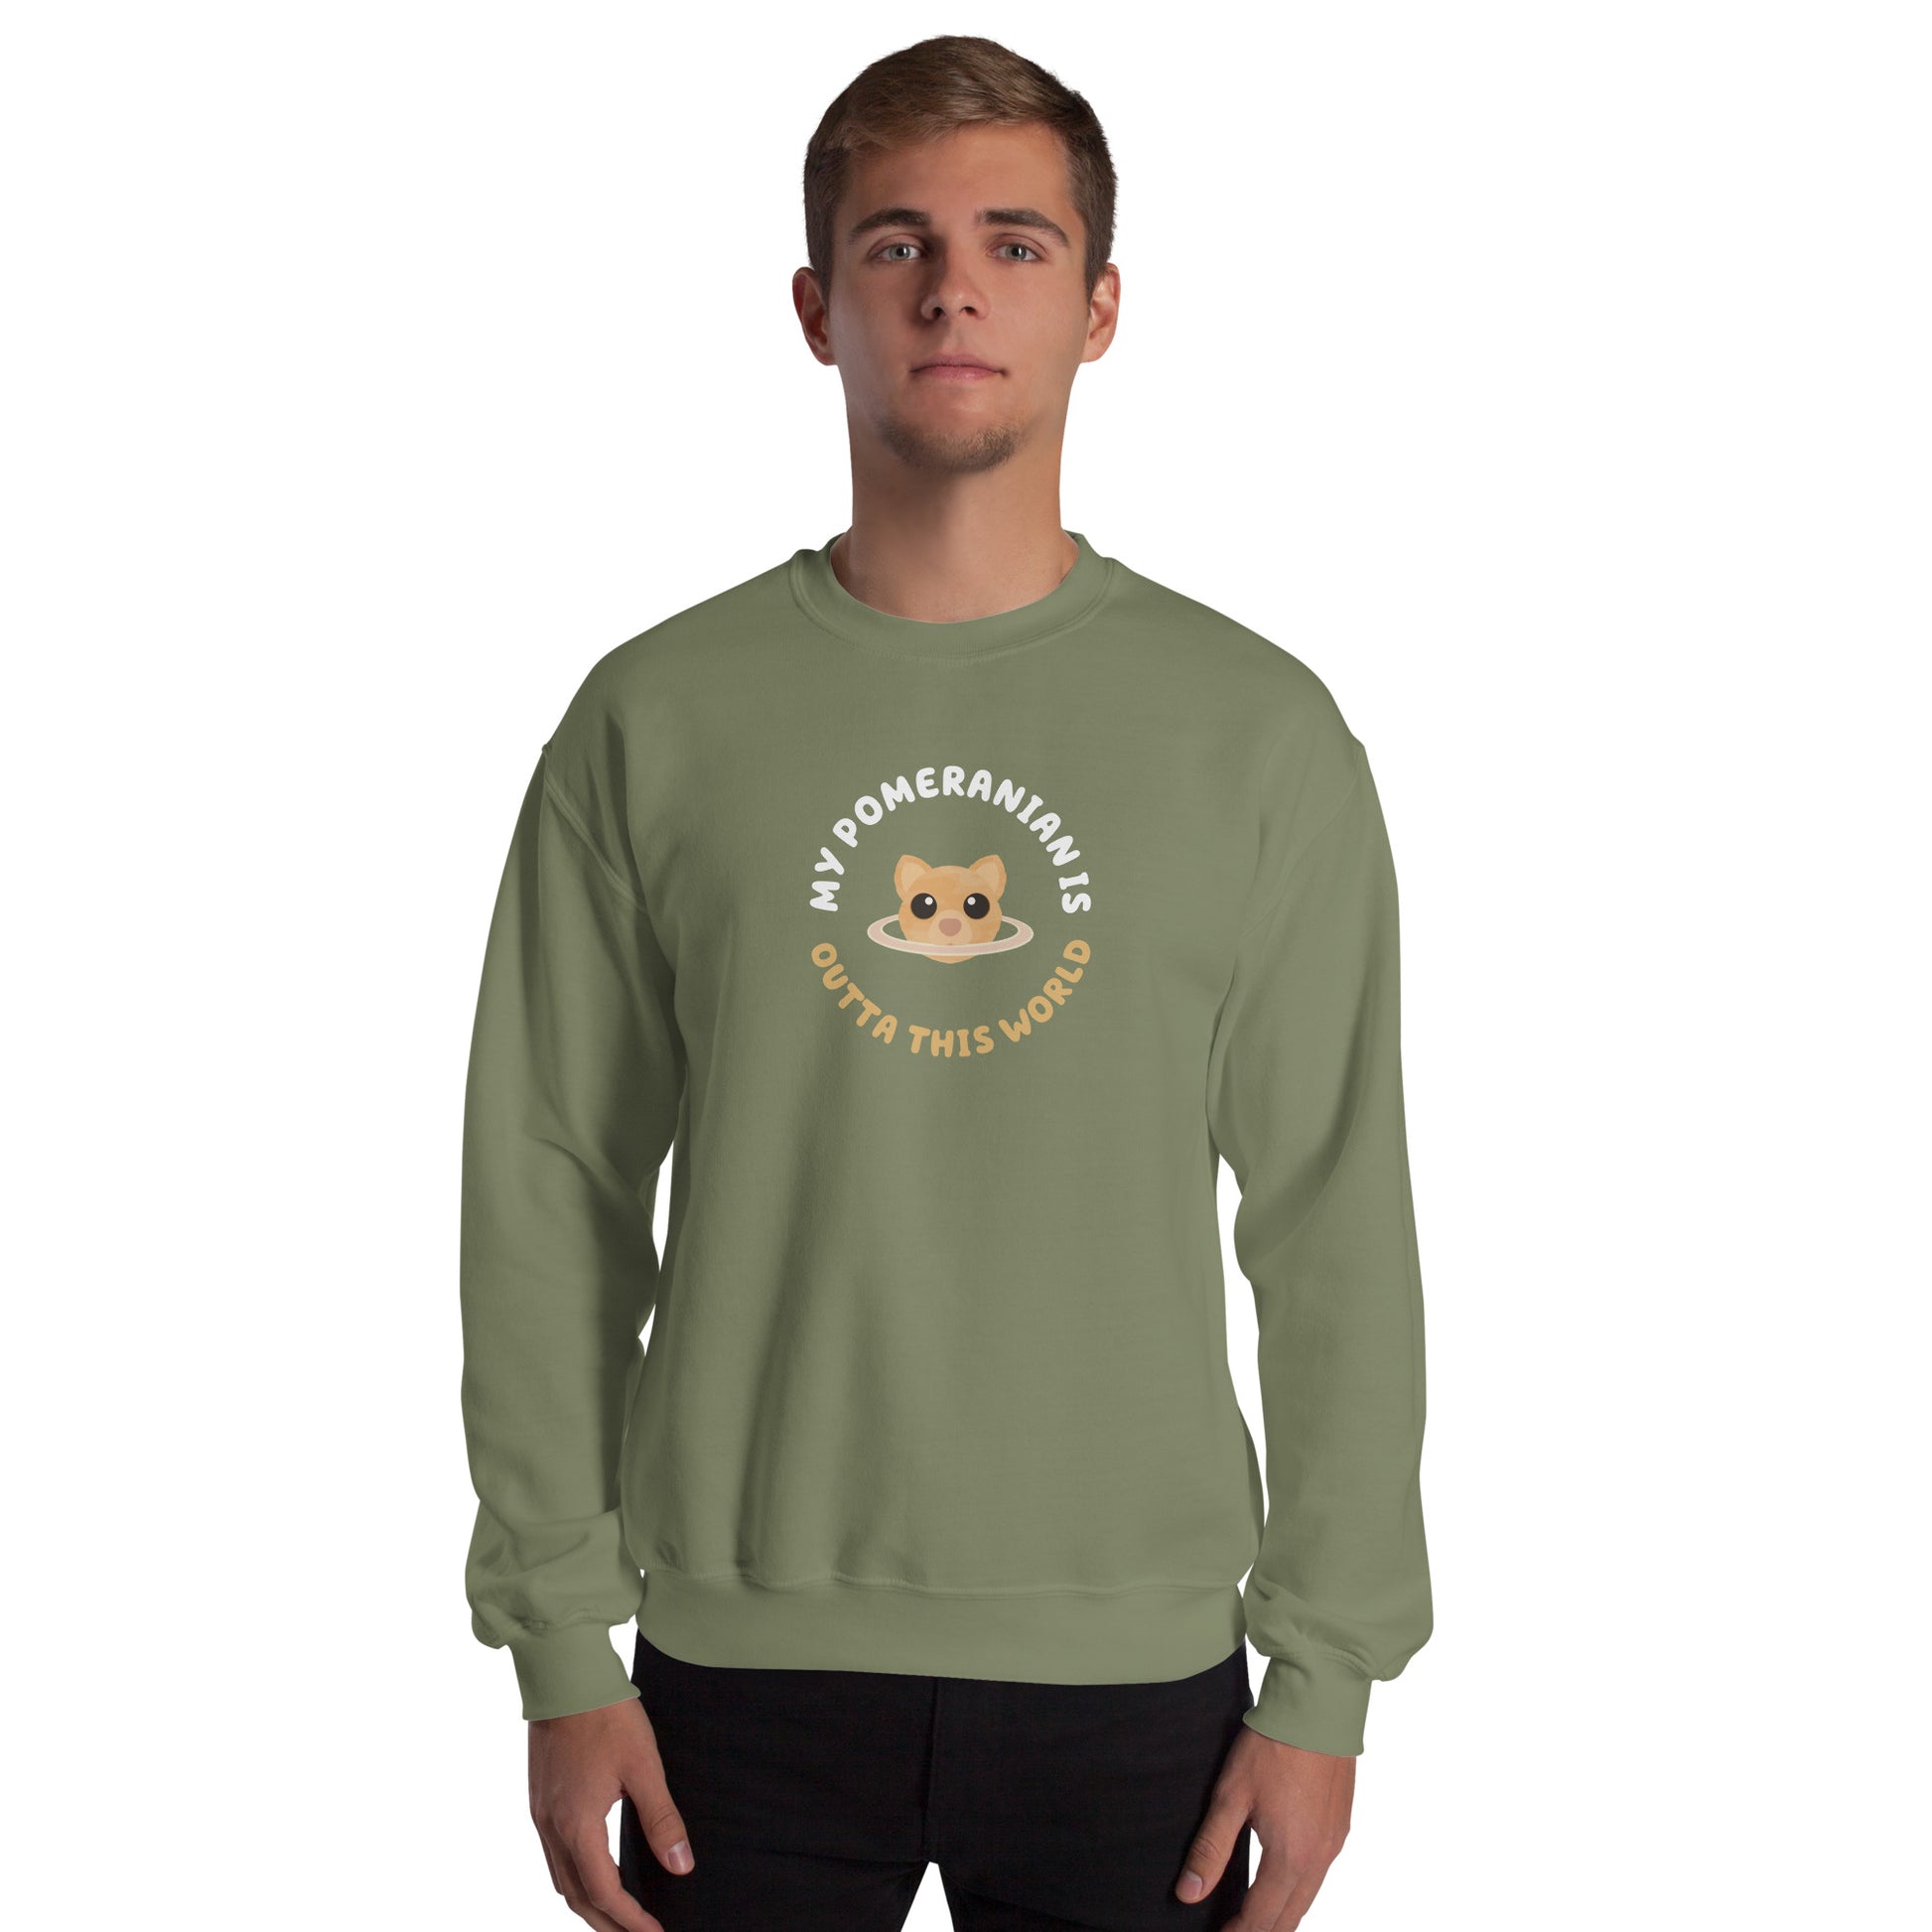 Astro-Mutts Outta This World Unisex Sweatshirt - Pomeranian - Boogs & Boop